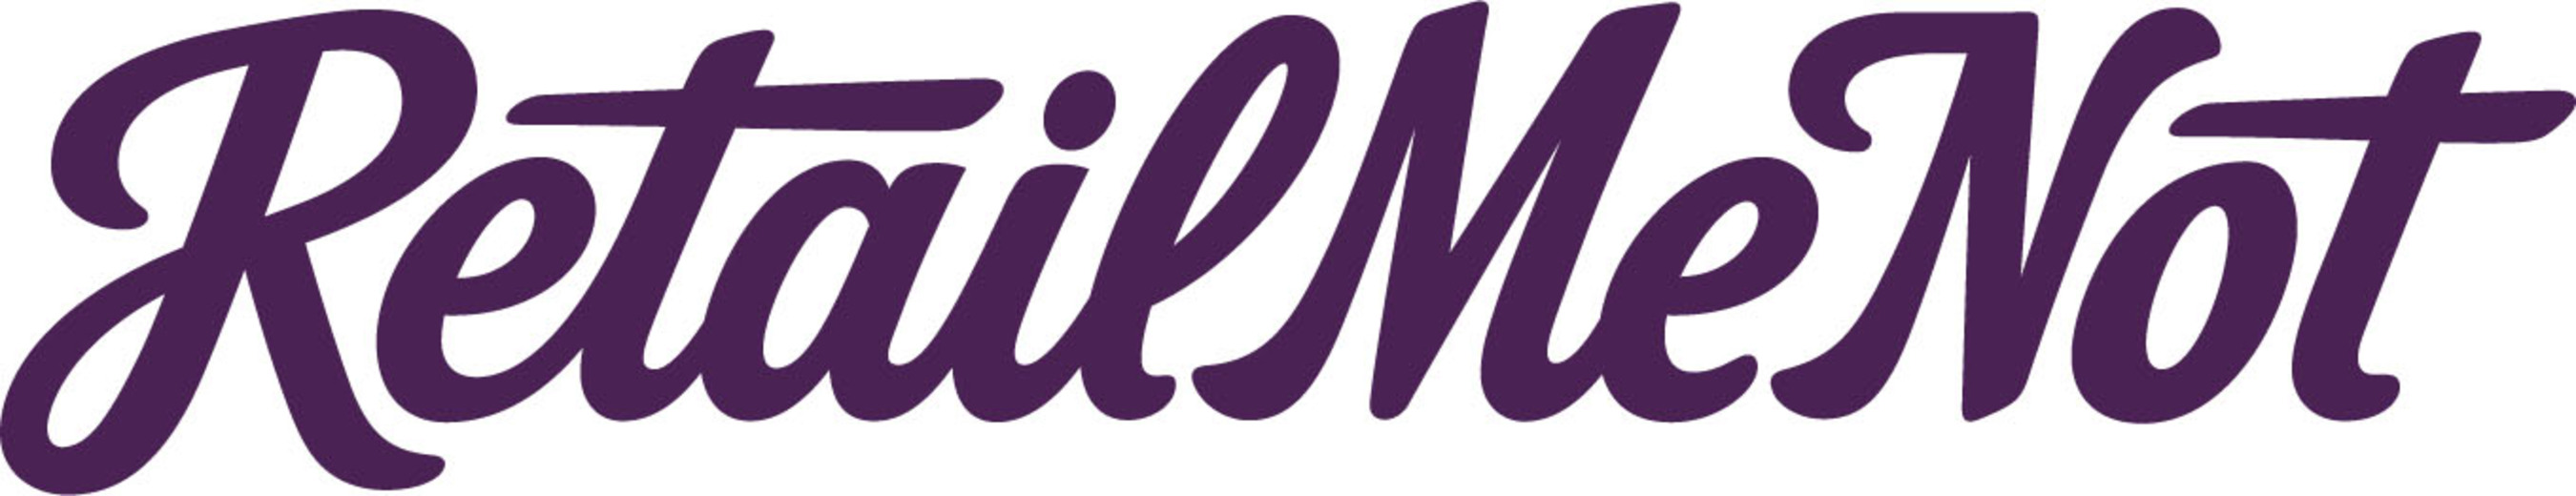 RetailMeNot, Inc. logo.